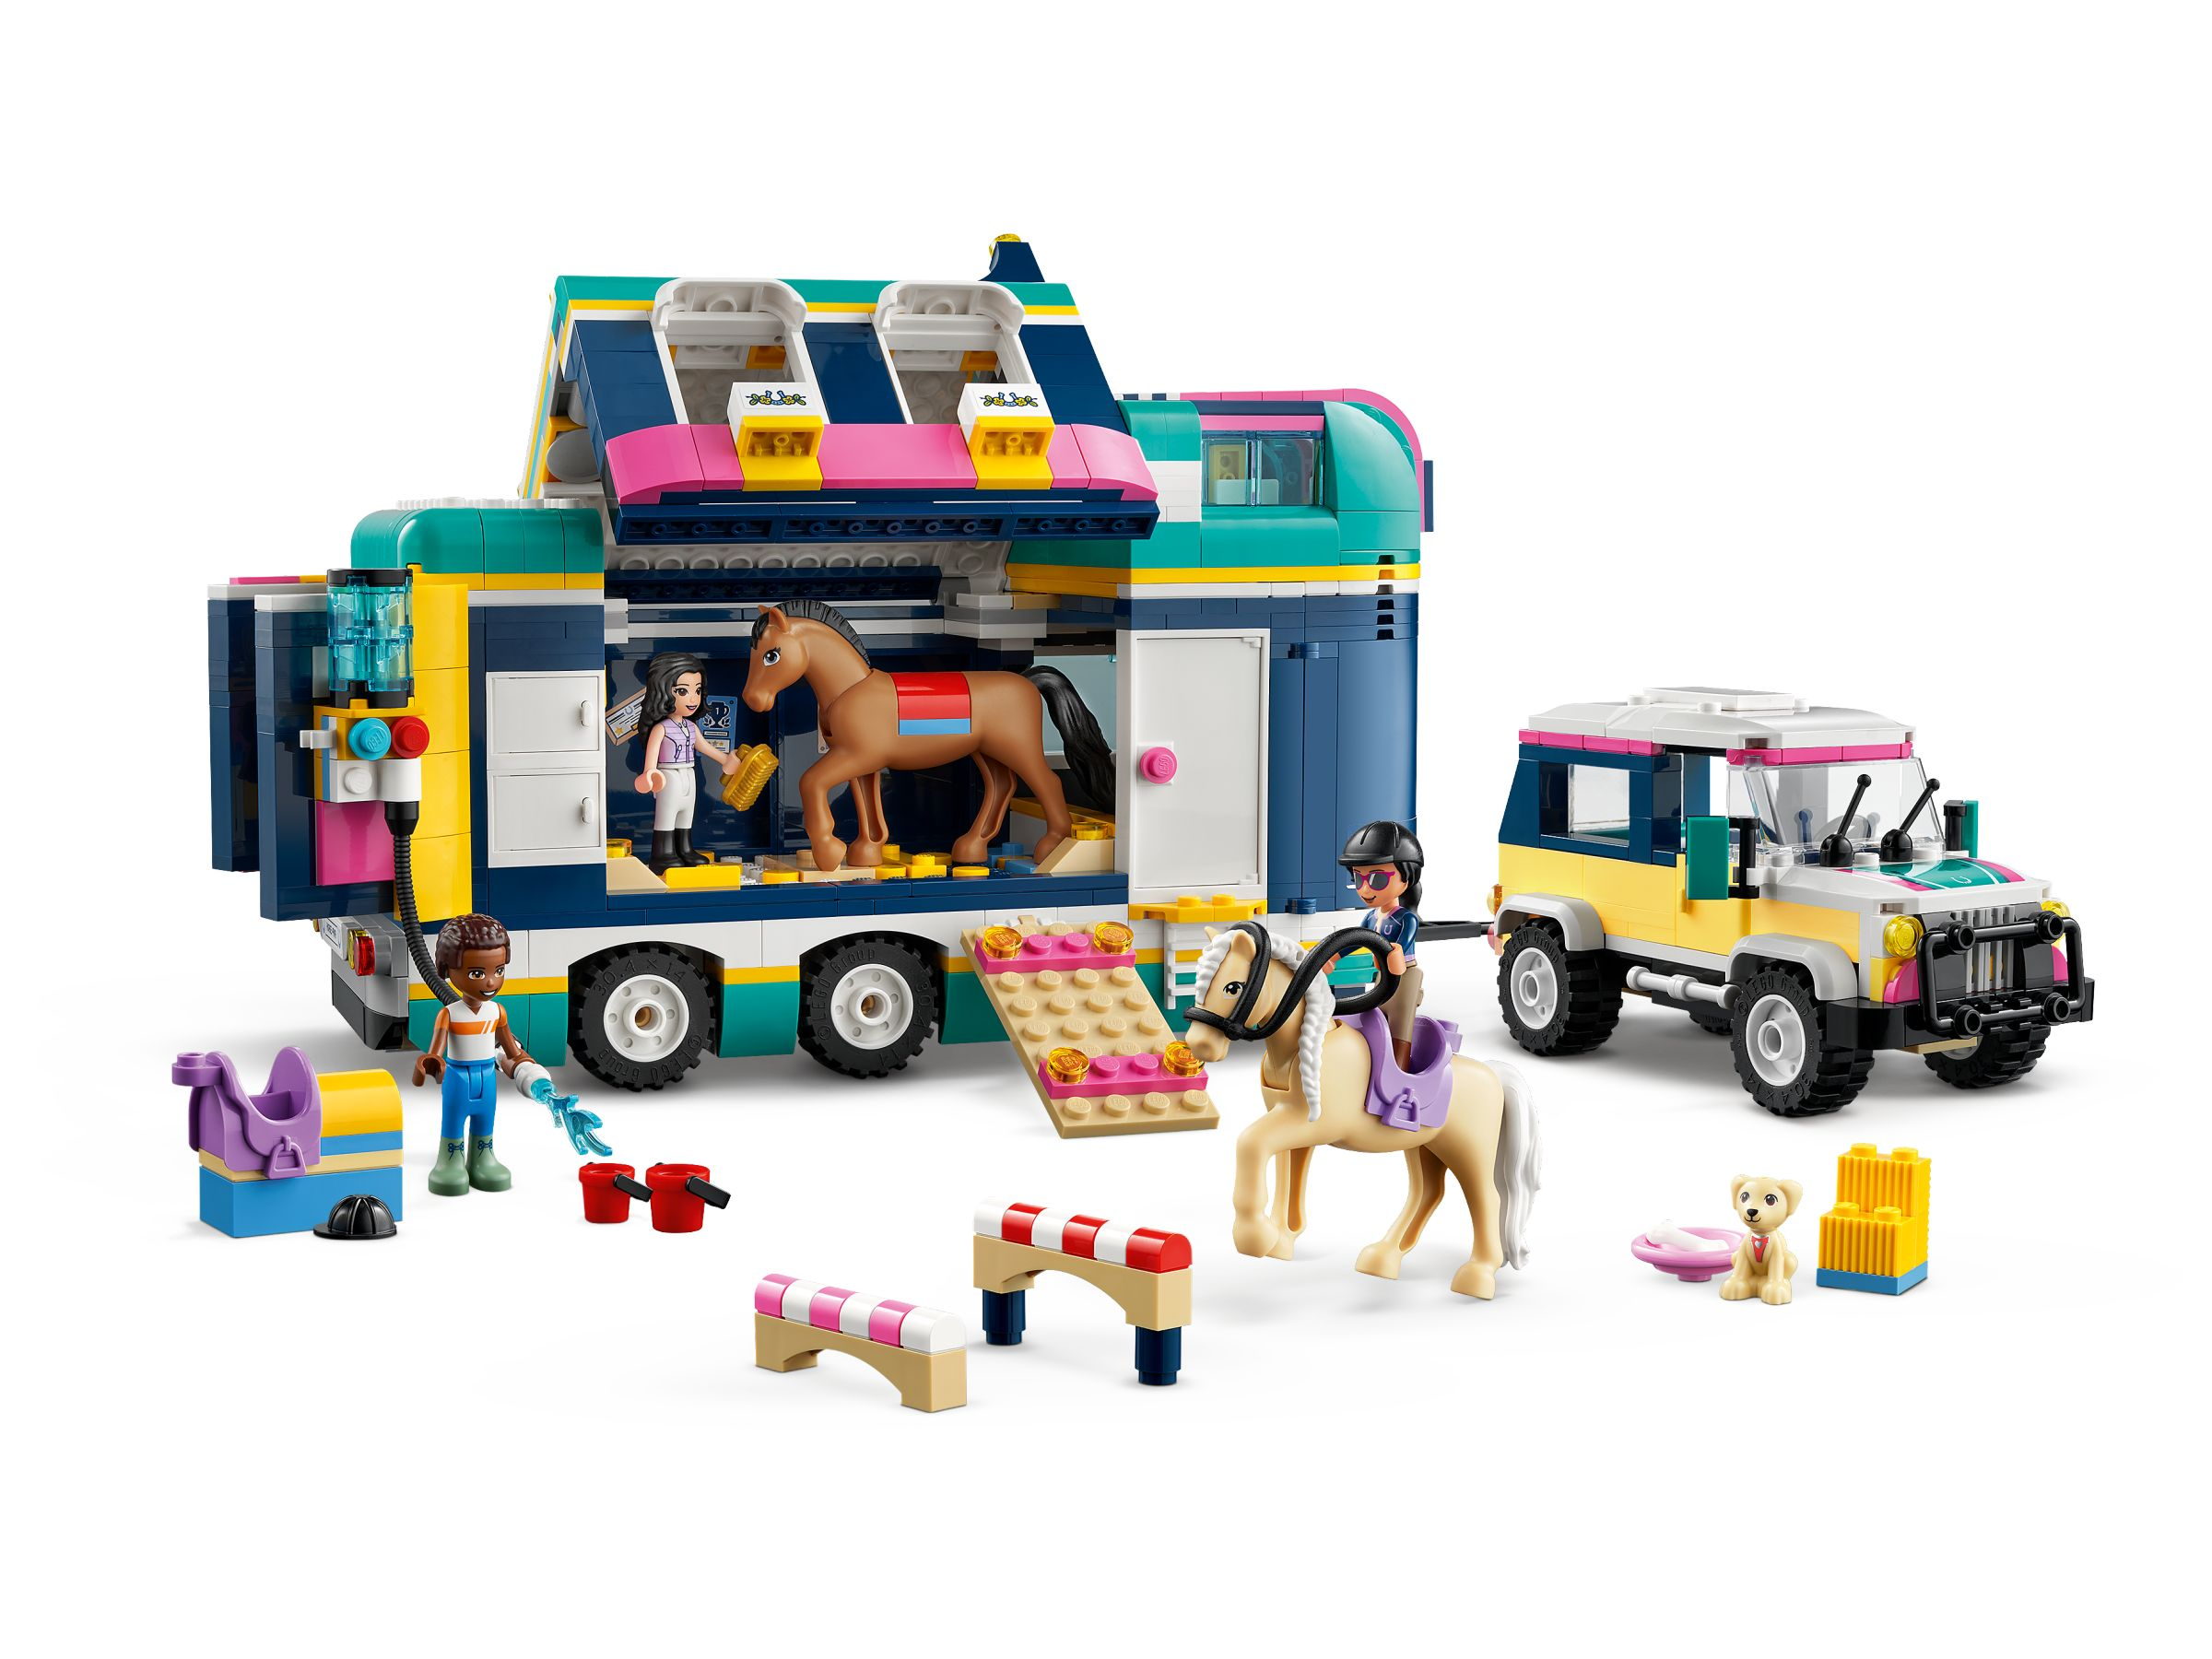 LEGO 41722 Bausatz Pferdeanhänger